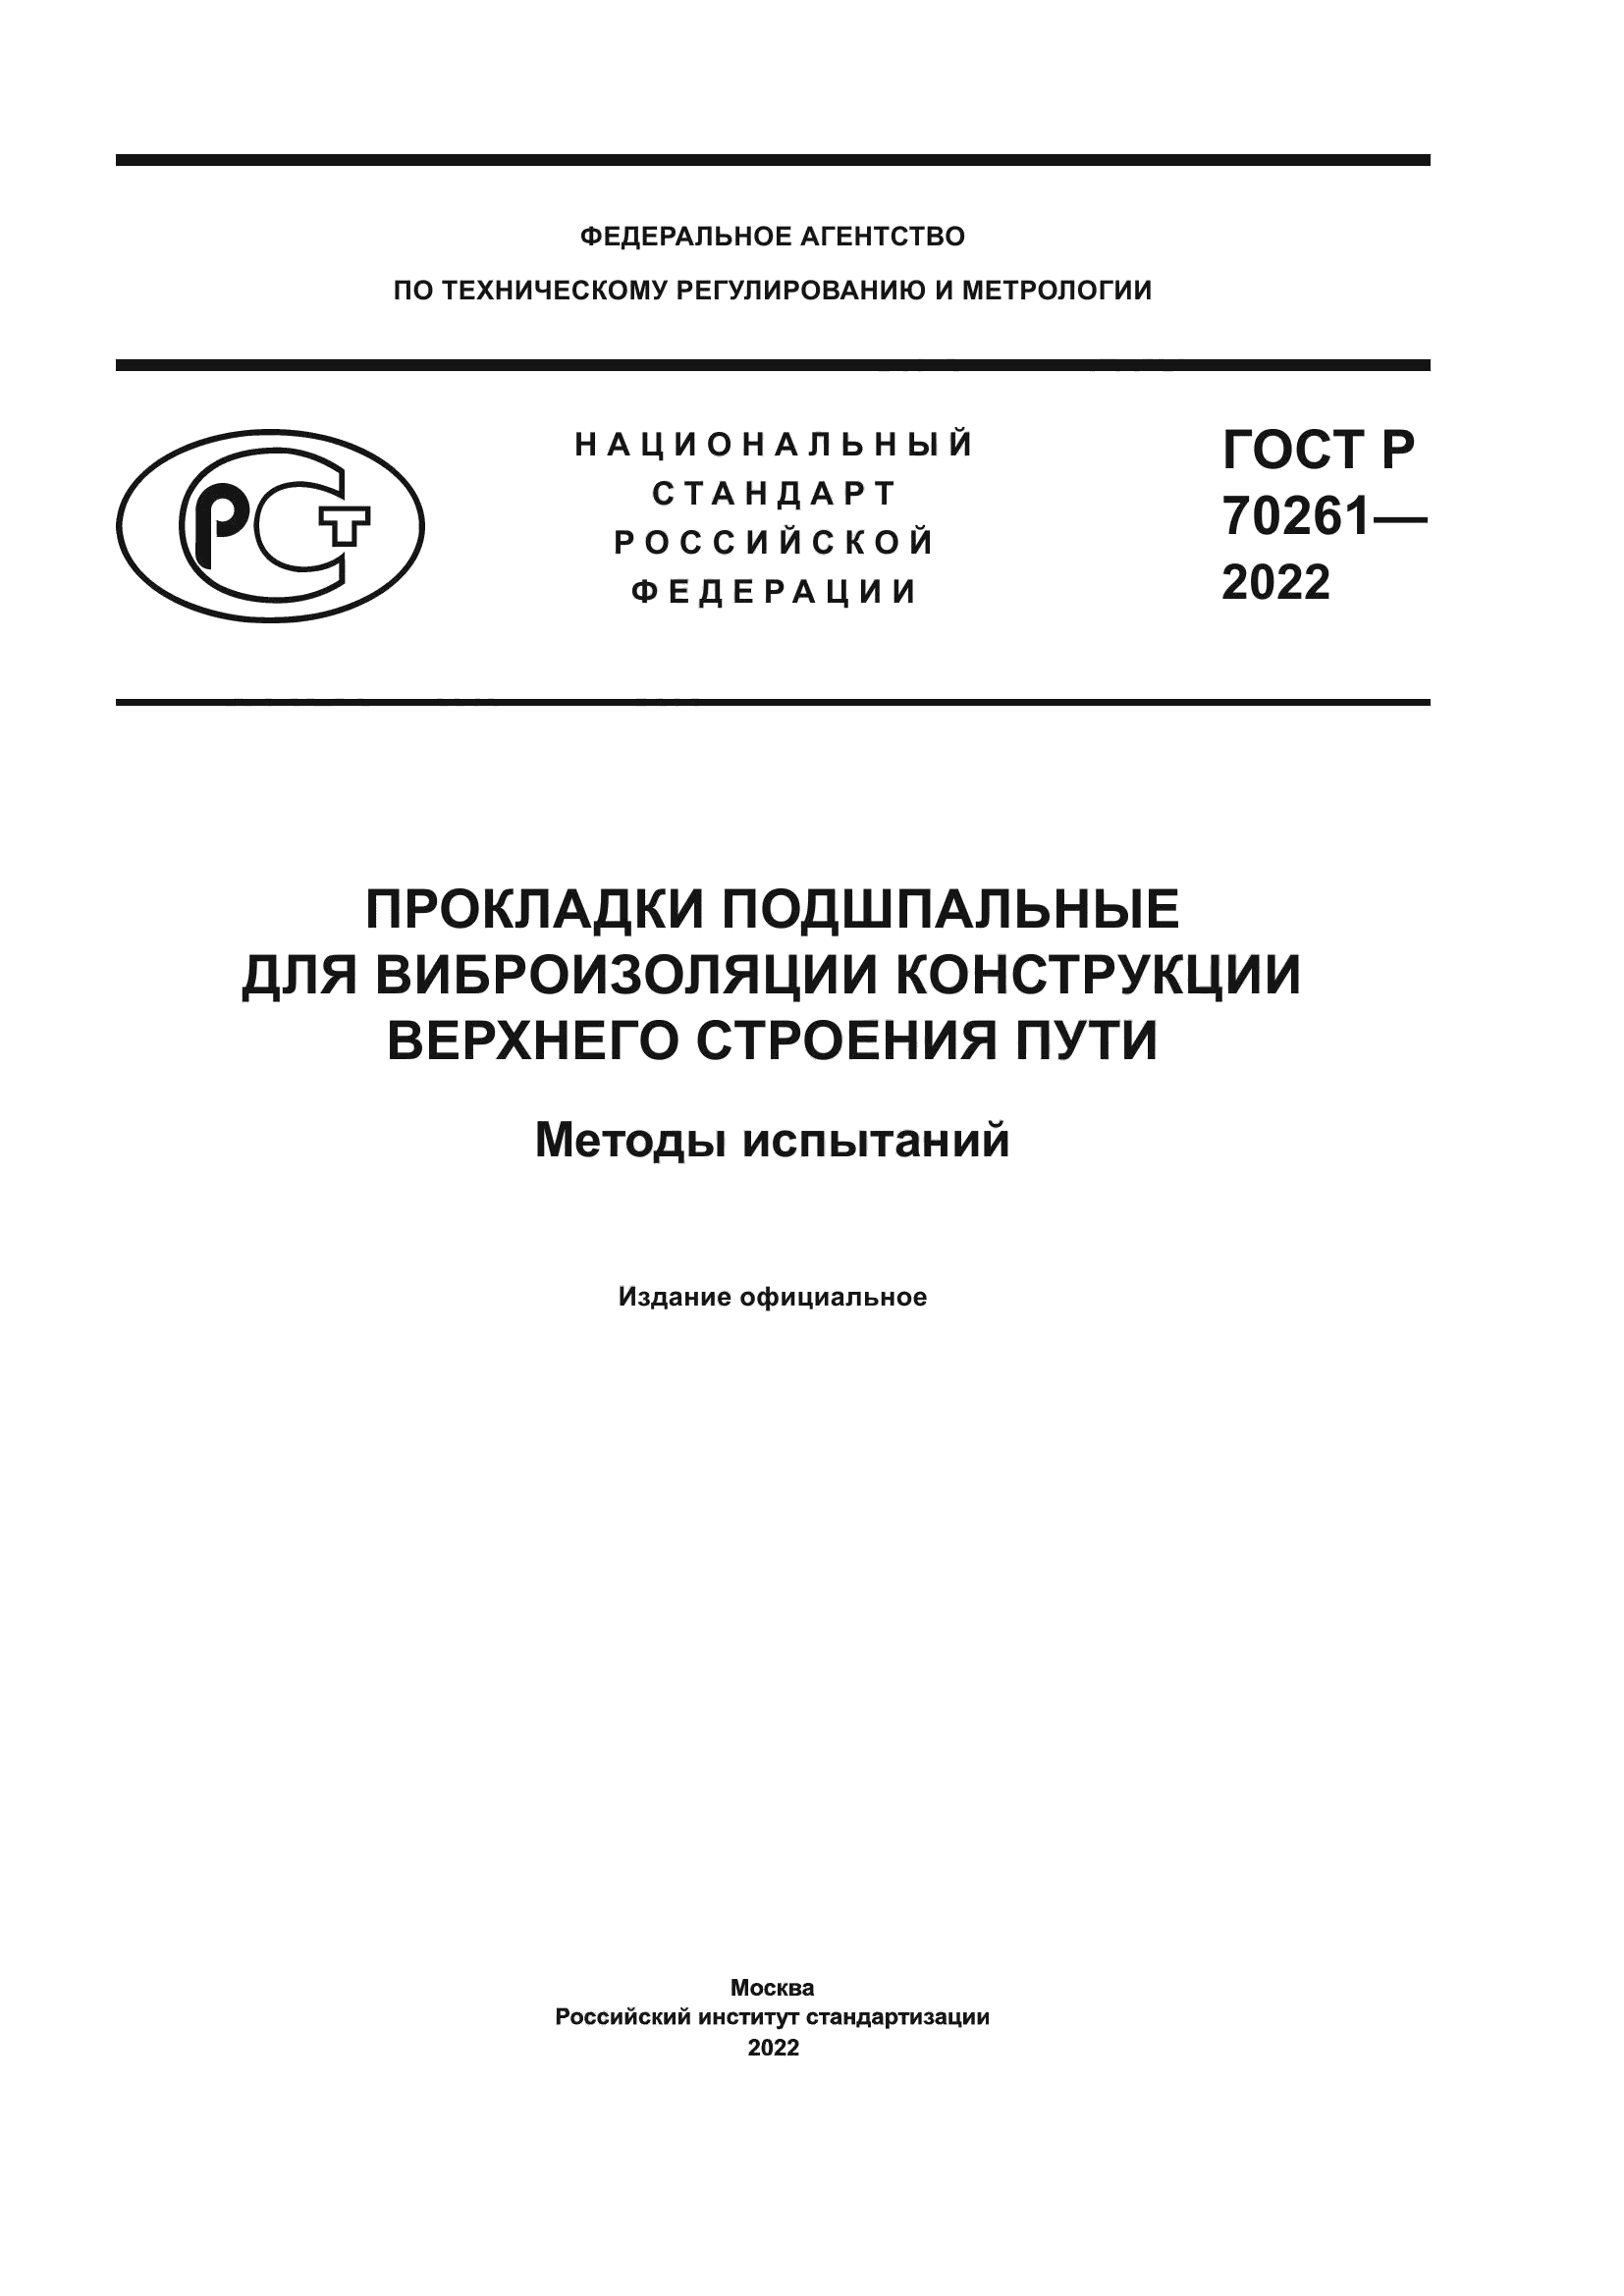 ГОСТ Р 70261-2022